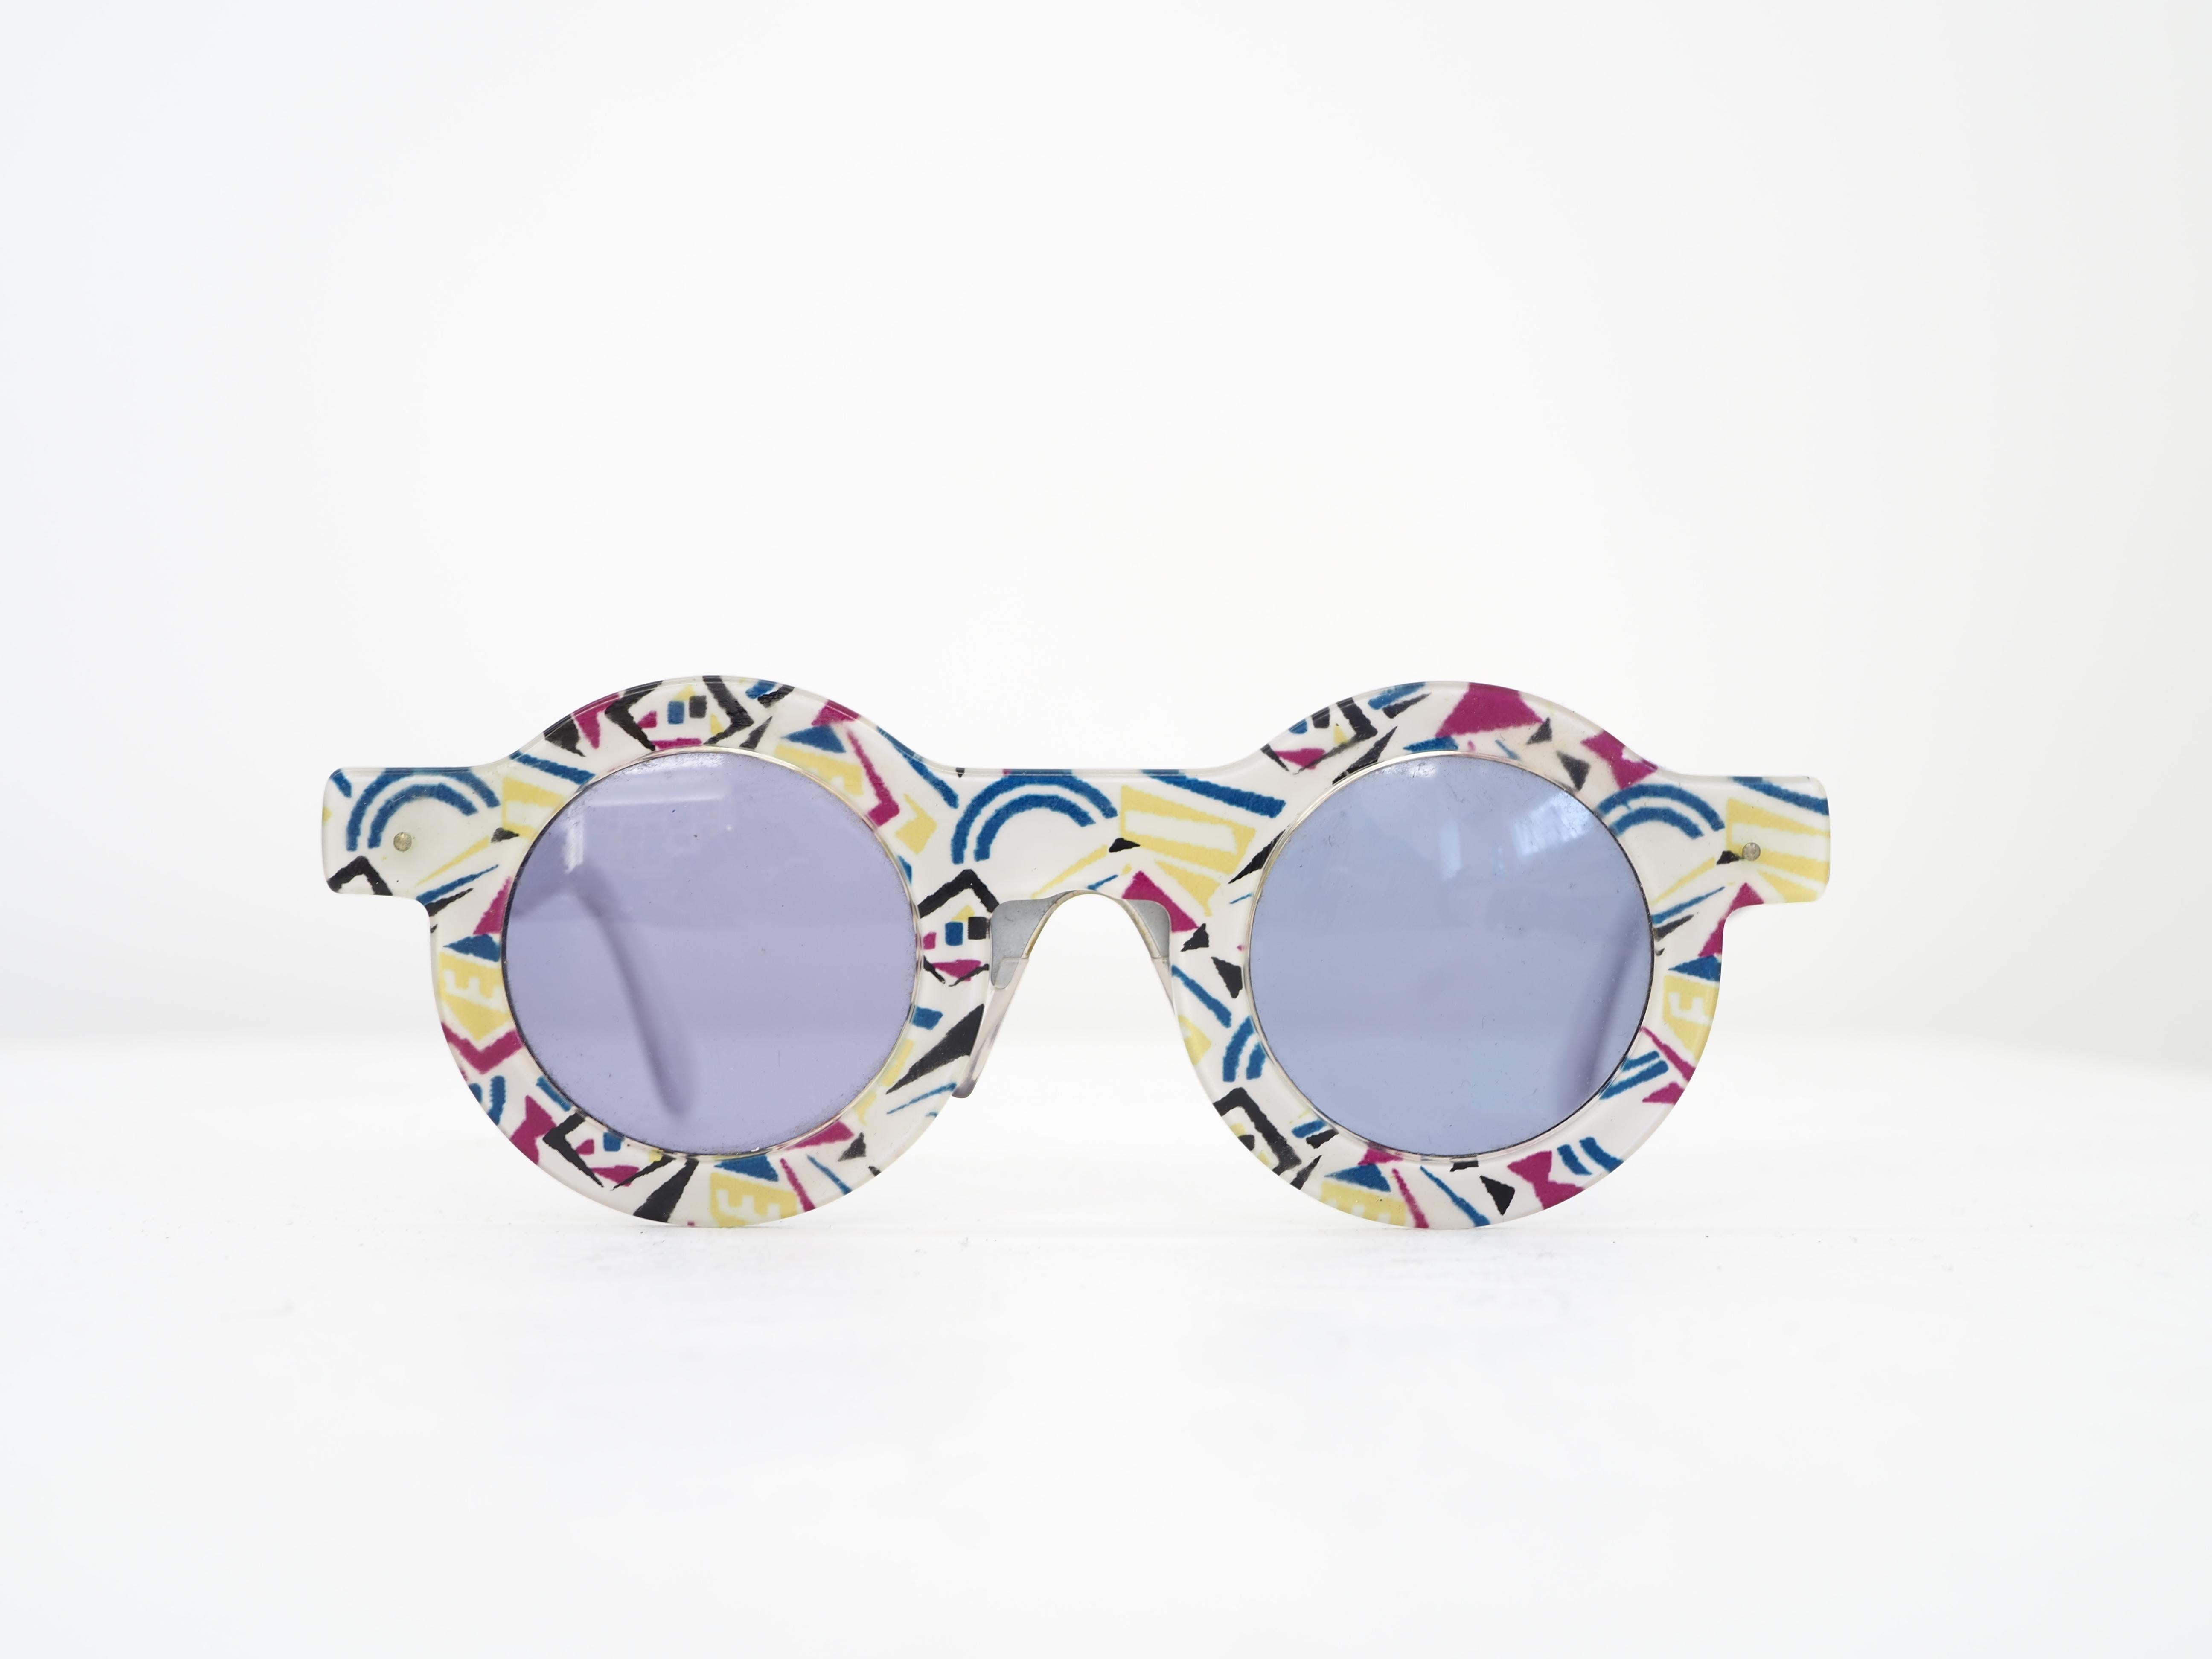 Swatch multicoloured multilens sunglasses In Good Condition For Sale In Capri, IT